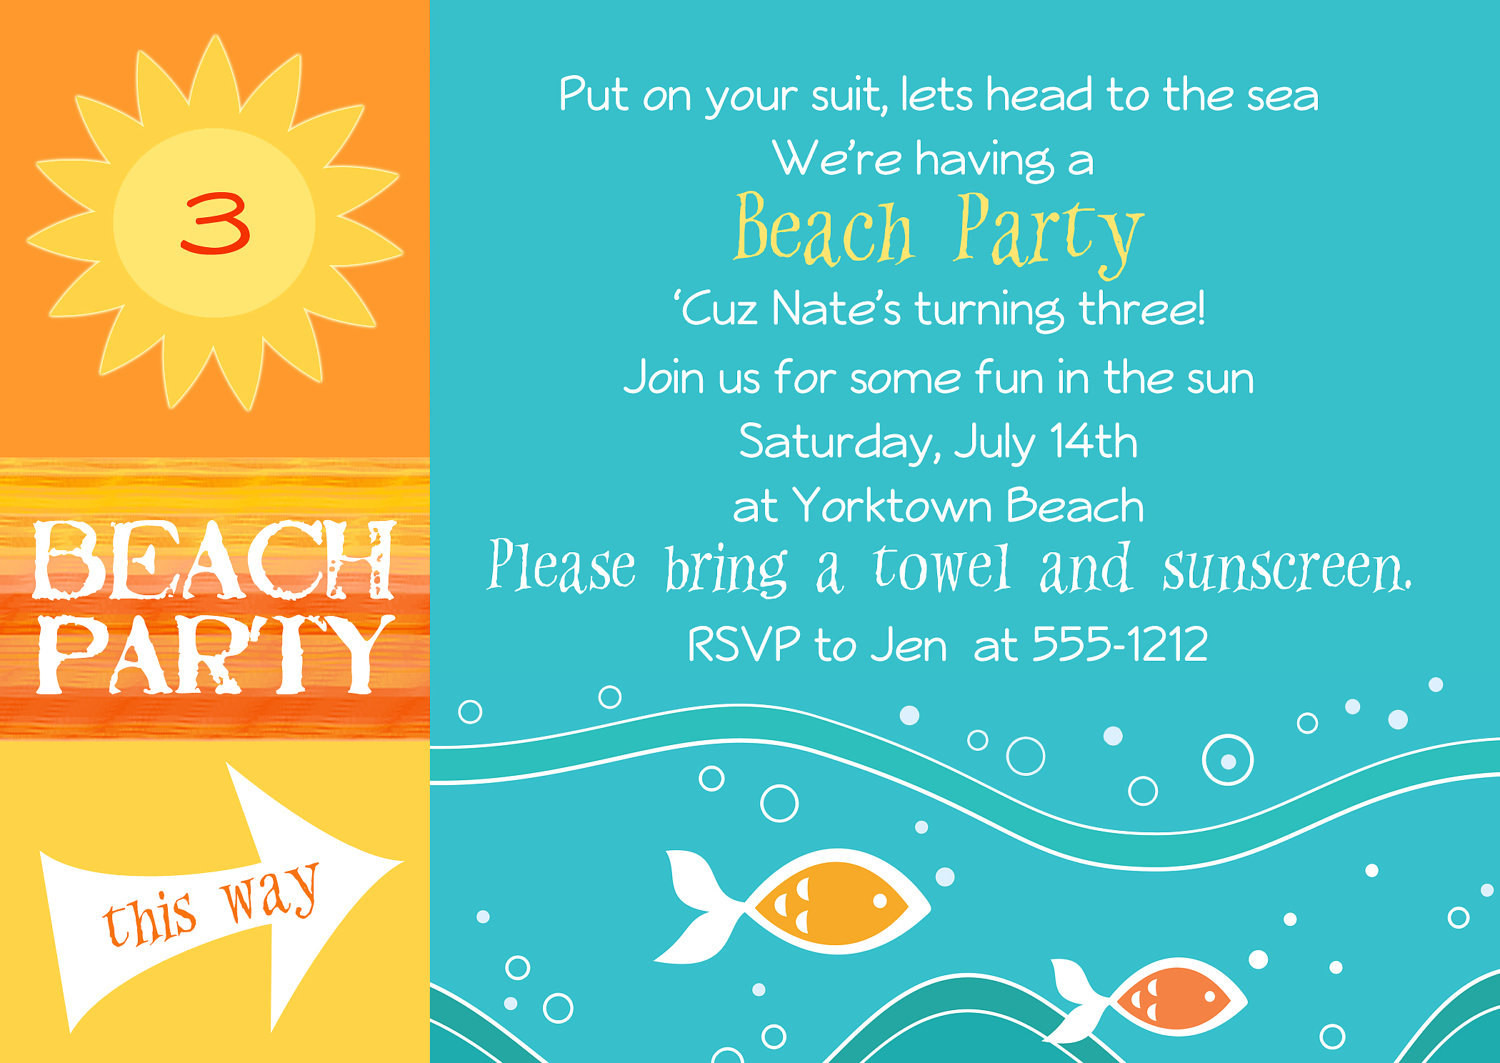 Beach Birthday Party Invitation Ideas
 Beach Party Invitations by JenTbyDesign on Etsy